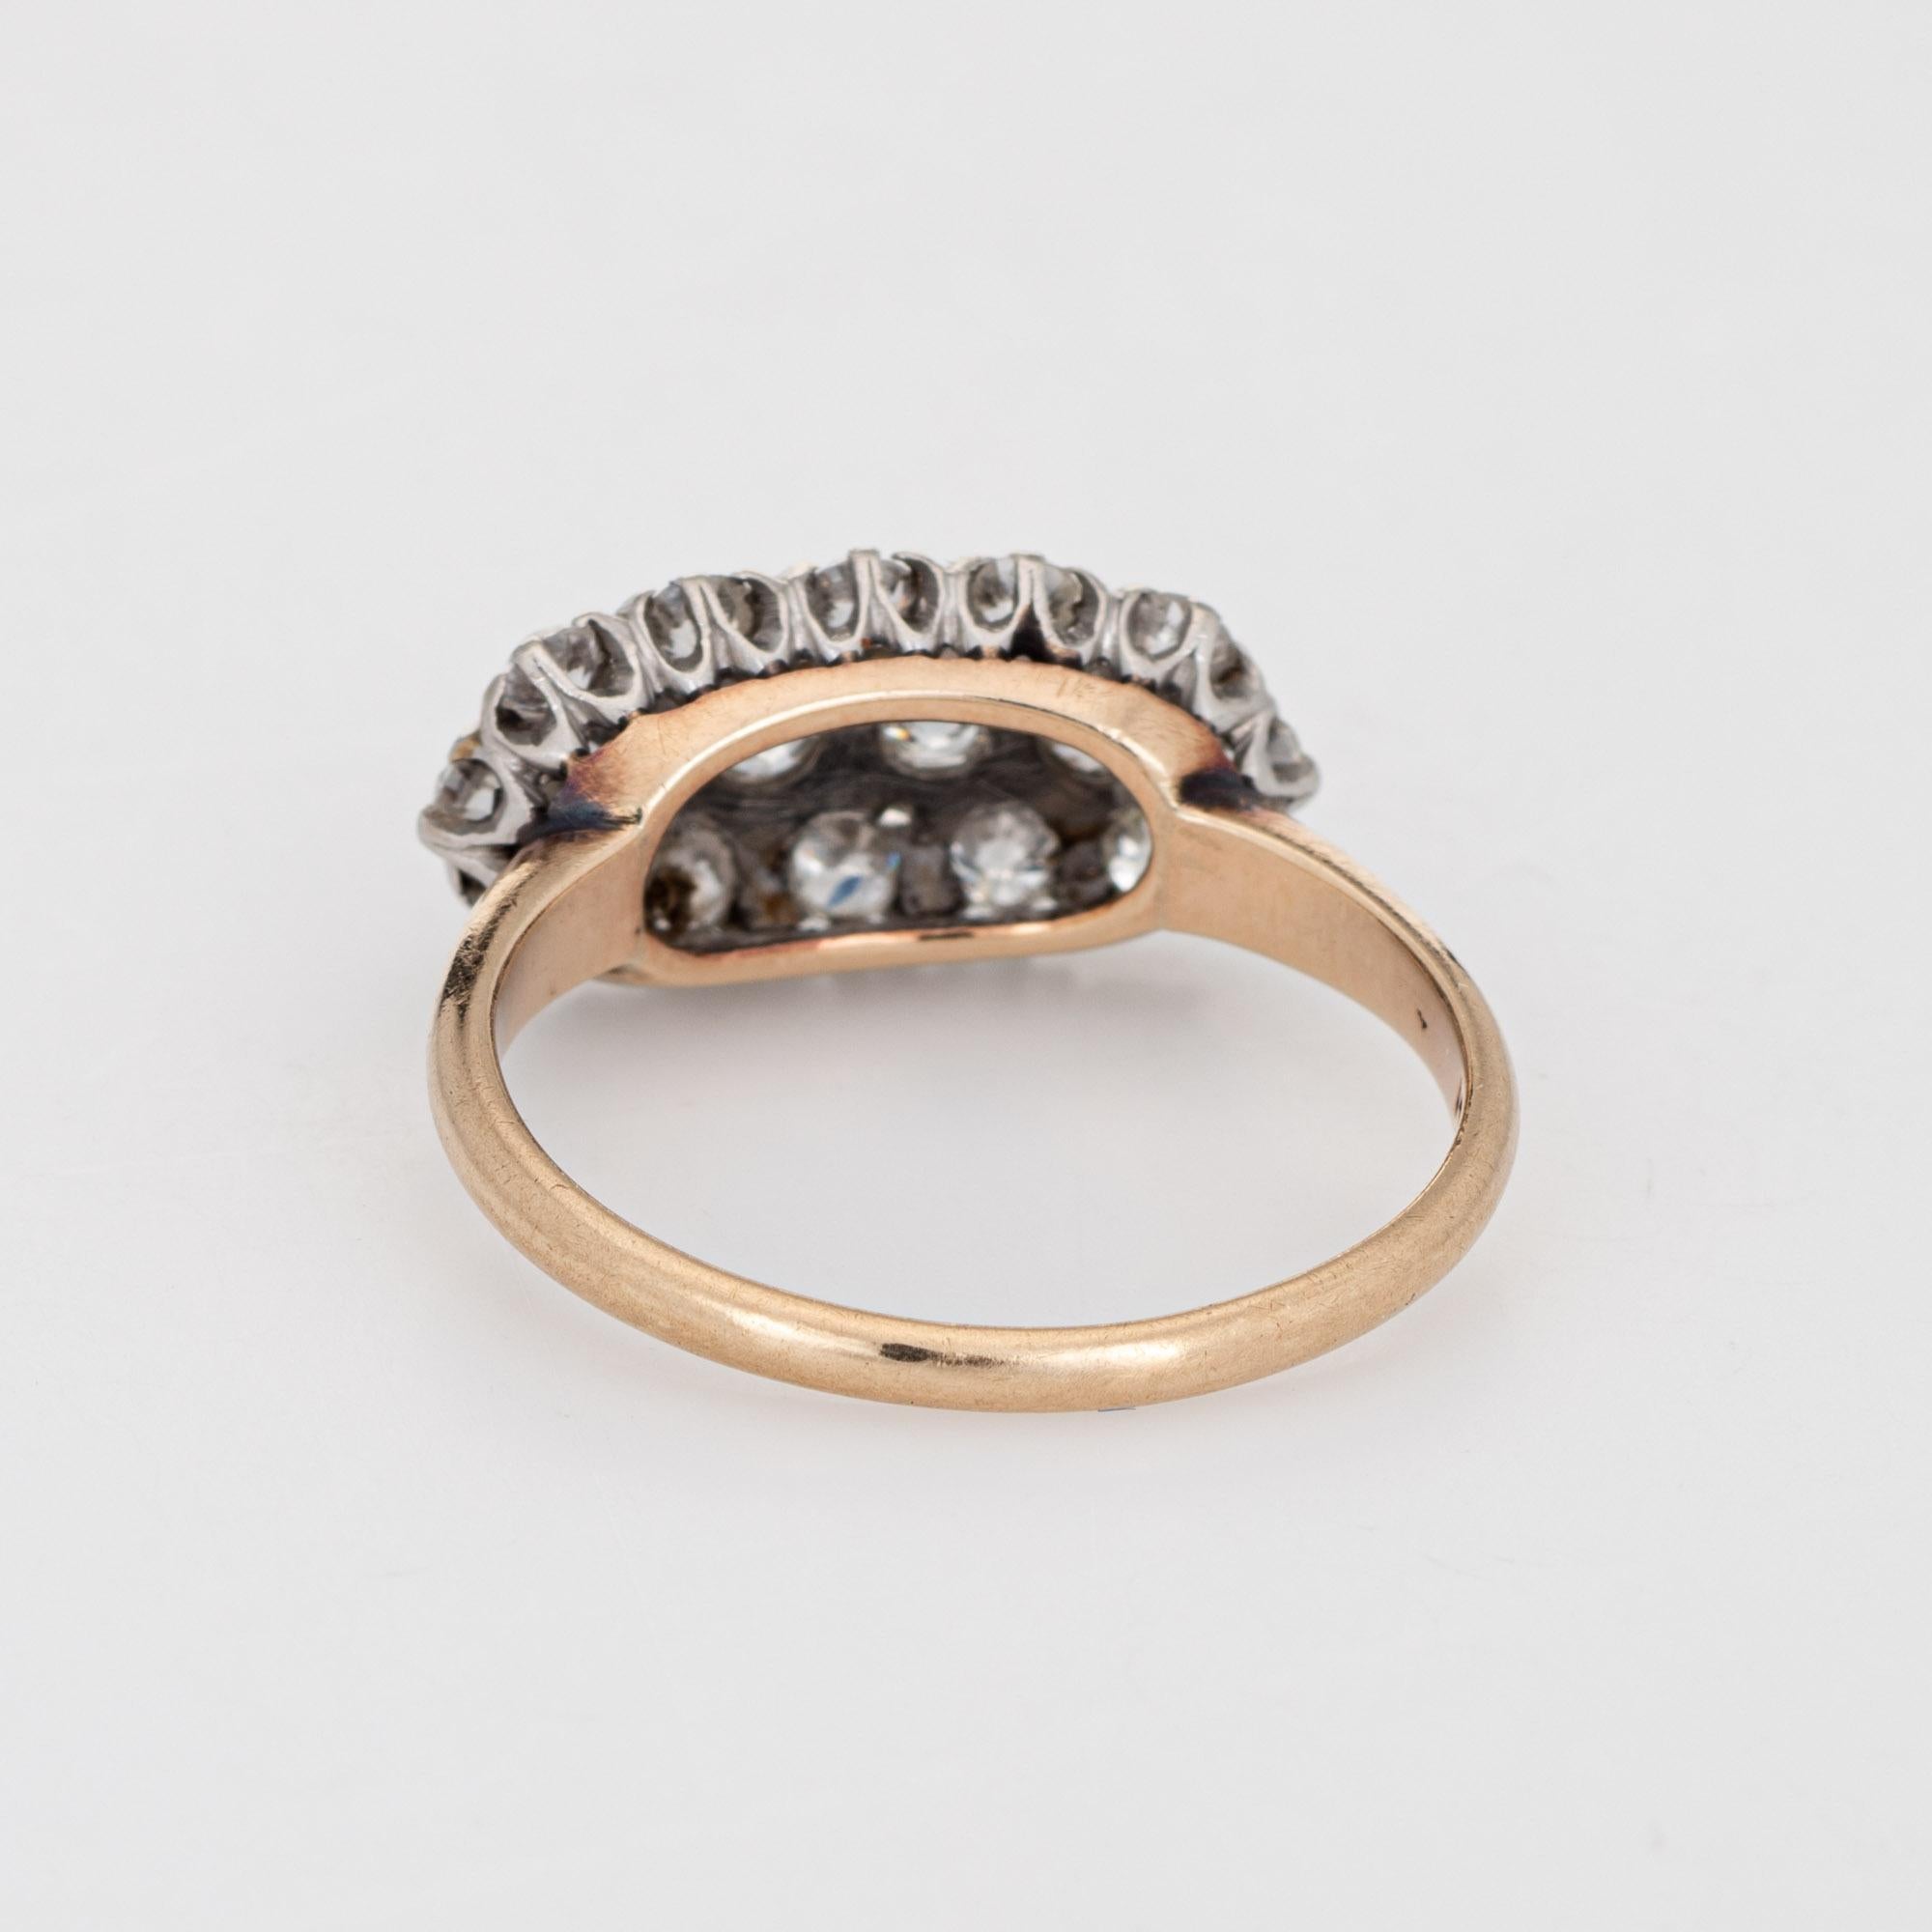 Women's Vintage Art Deco 3 Row Diamond Ring Old Mine Cuts 14k Gold Platinum Jewelry 7.25